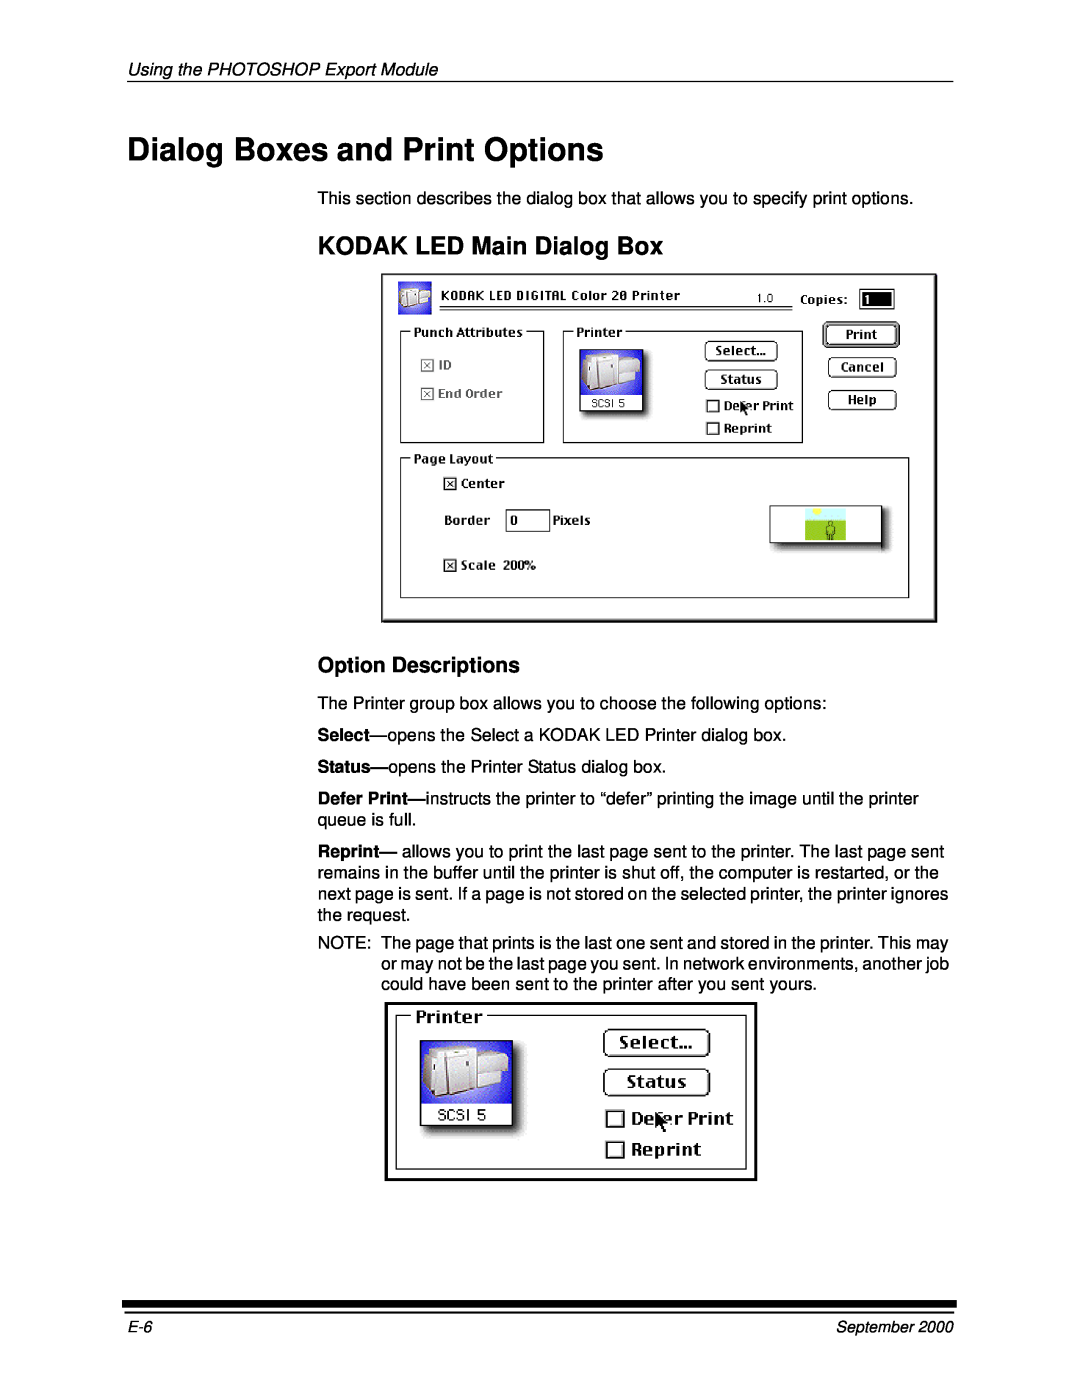 Kodak 20R manual KODAK LED Main Dialog Box, Dialog Boxes and Print Options, Option Descriptions 